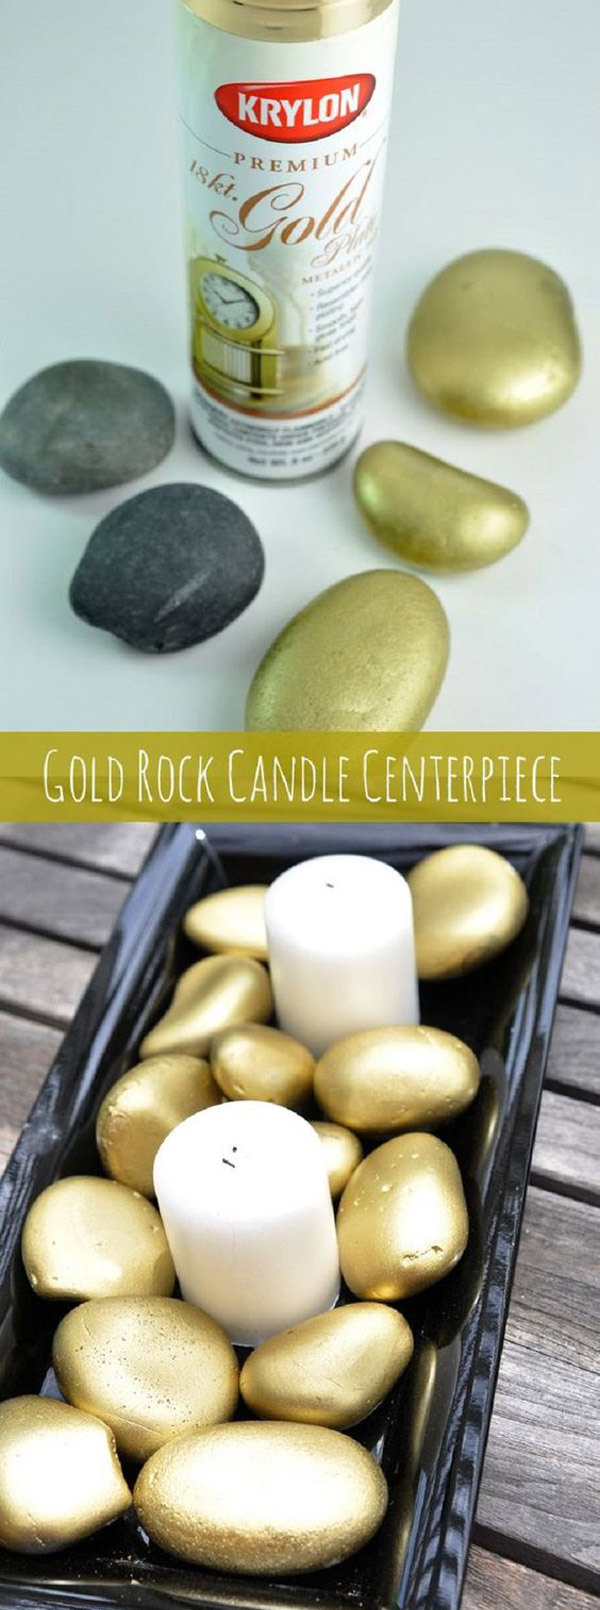 Gold Rock Candle Centerpiece